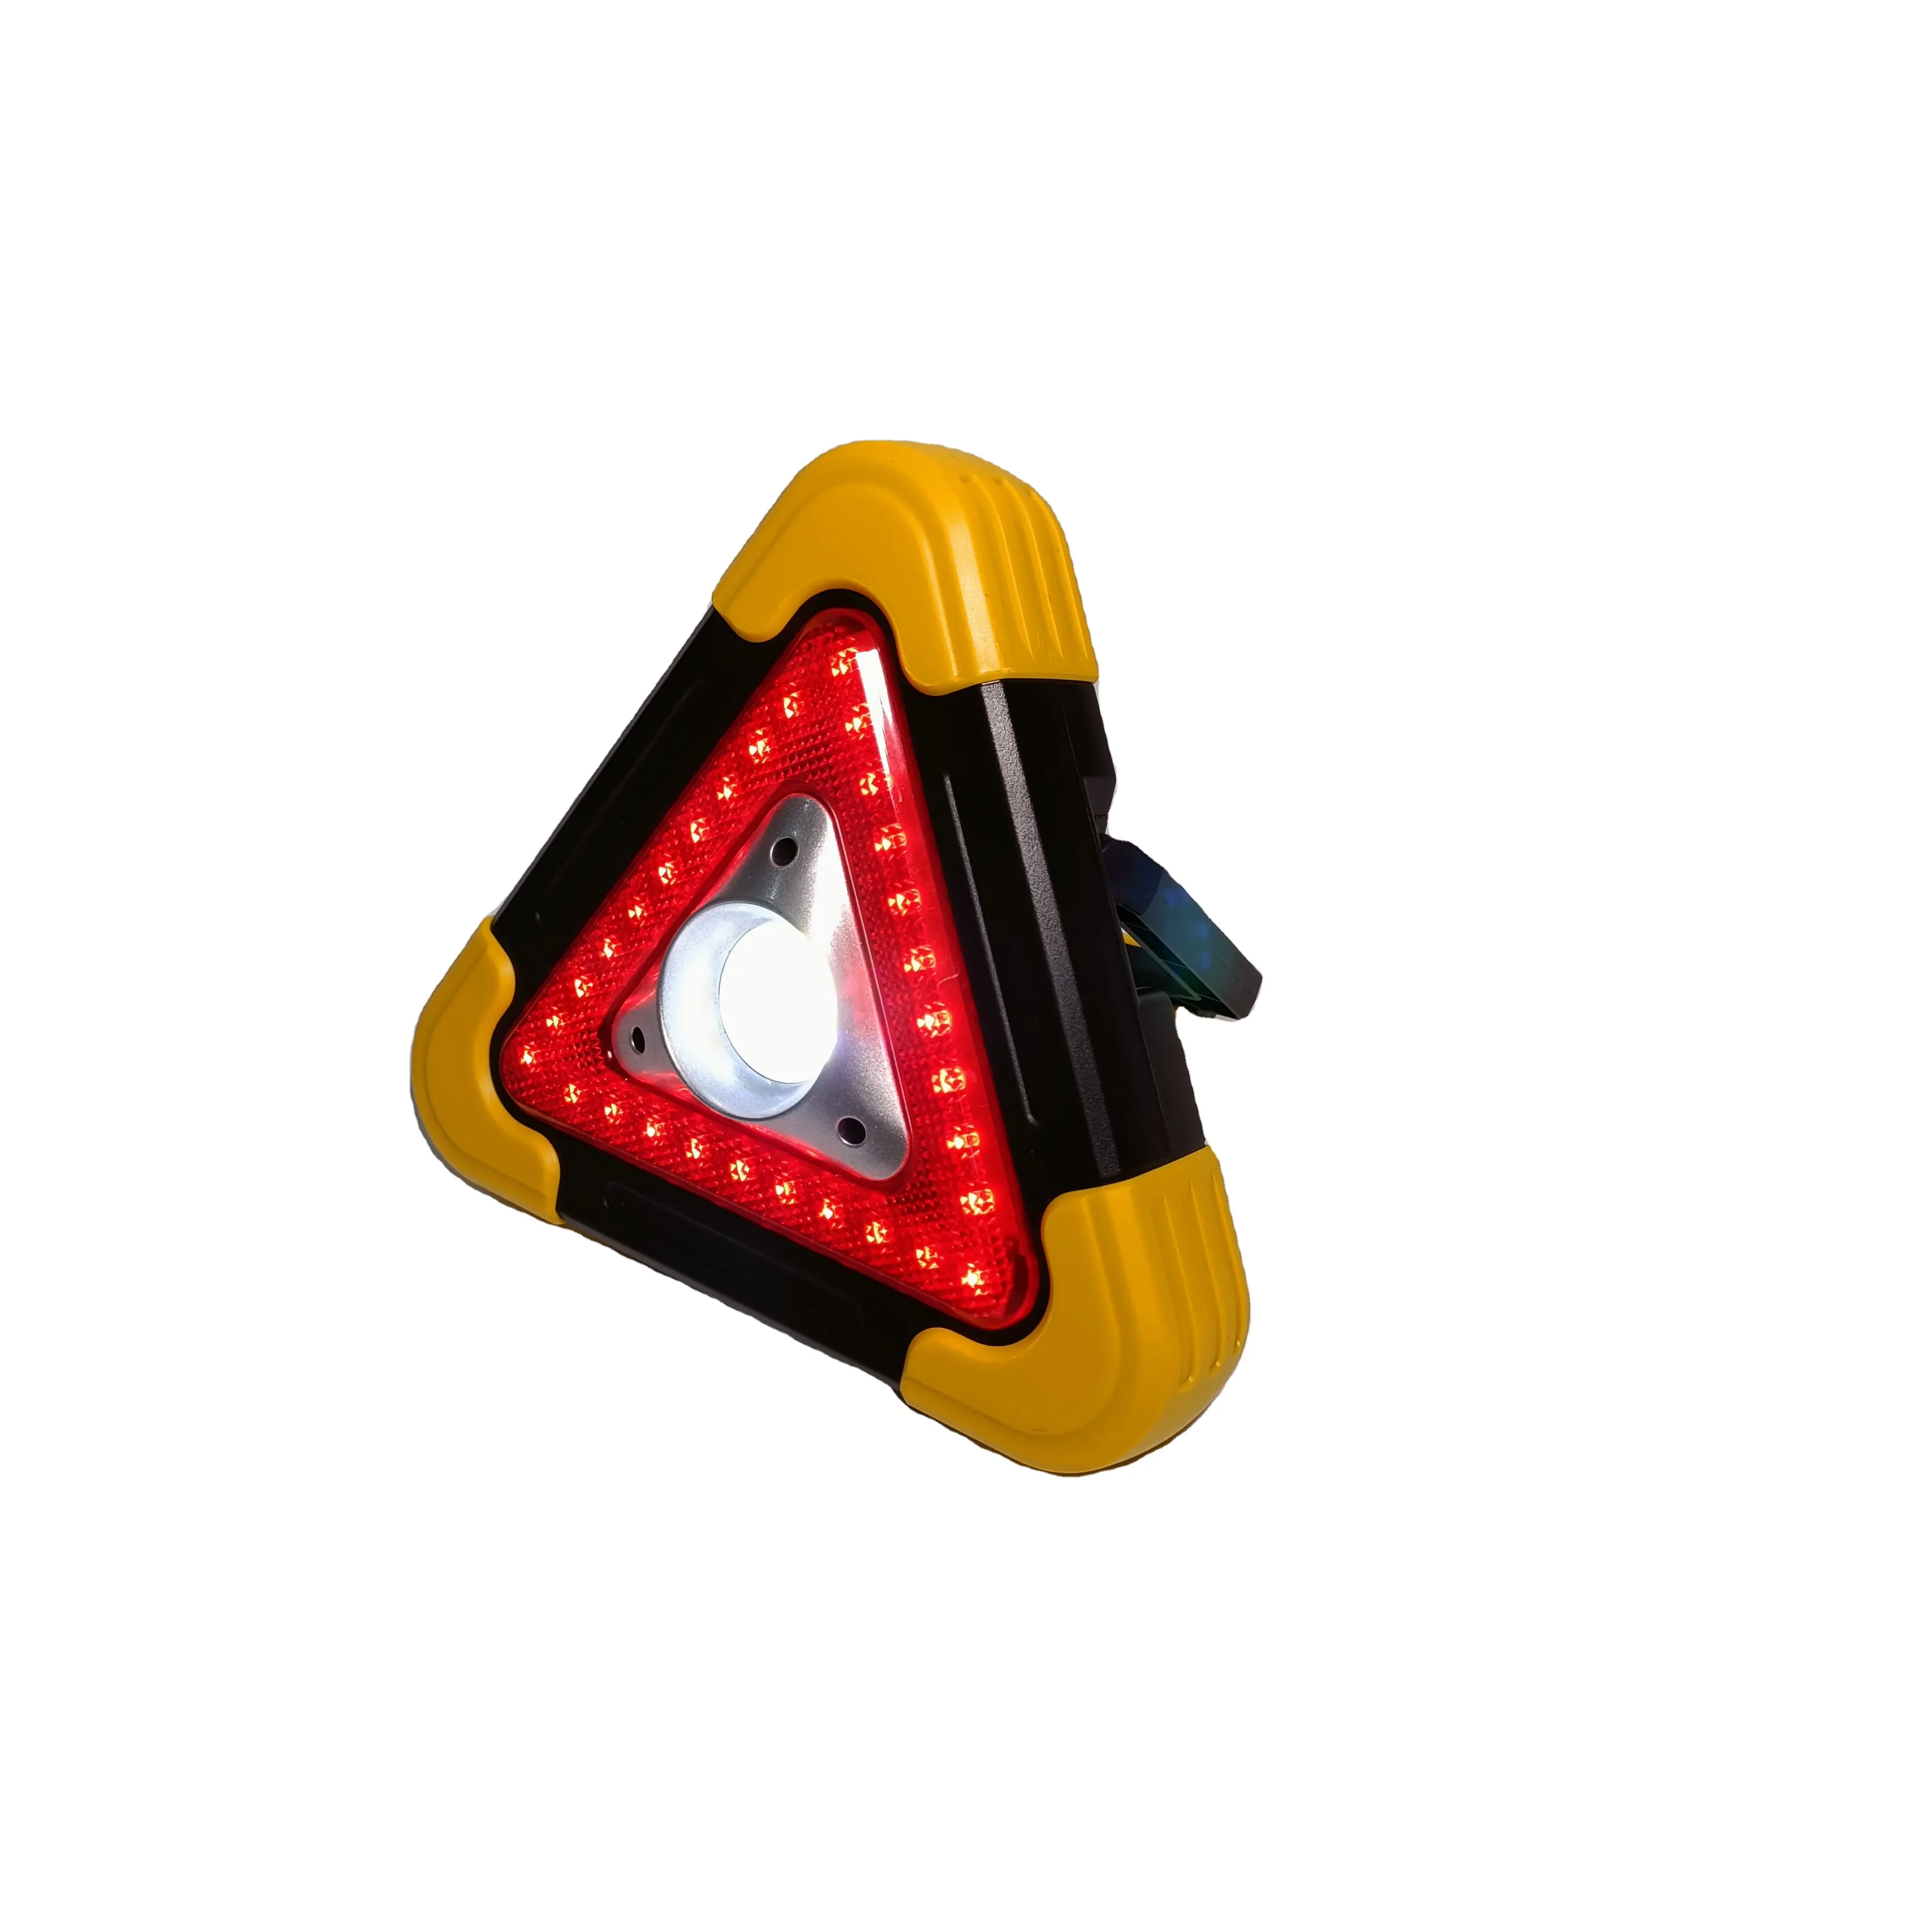 LED Triangle Warning Light Traffic Warning Triangle Safety Light Roadside Flashing Light COB Emergency Lamp With USB Charging